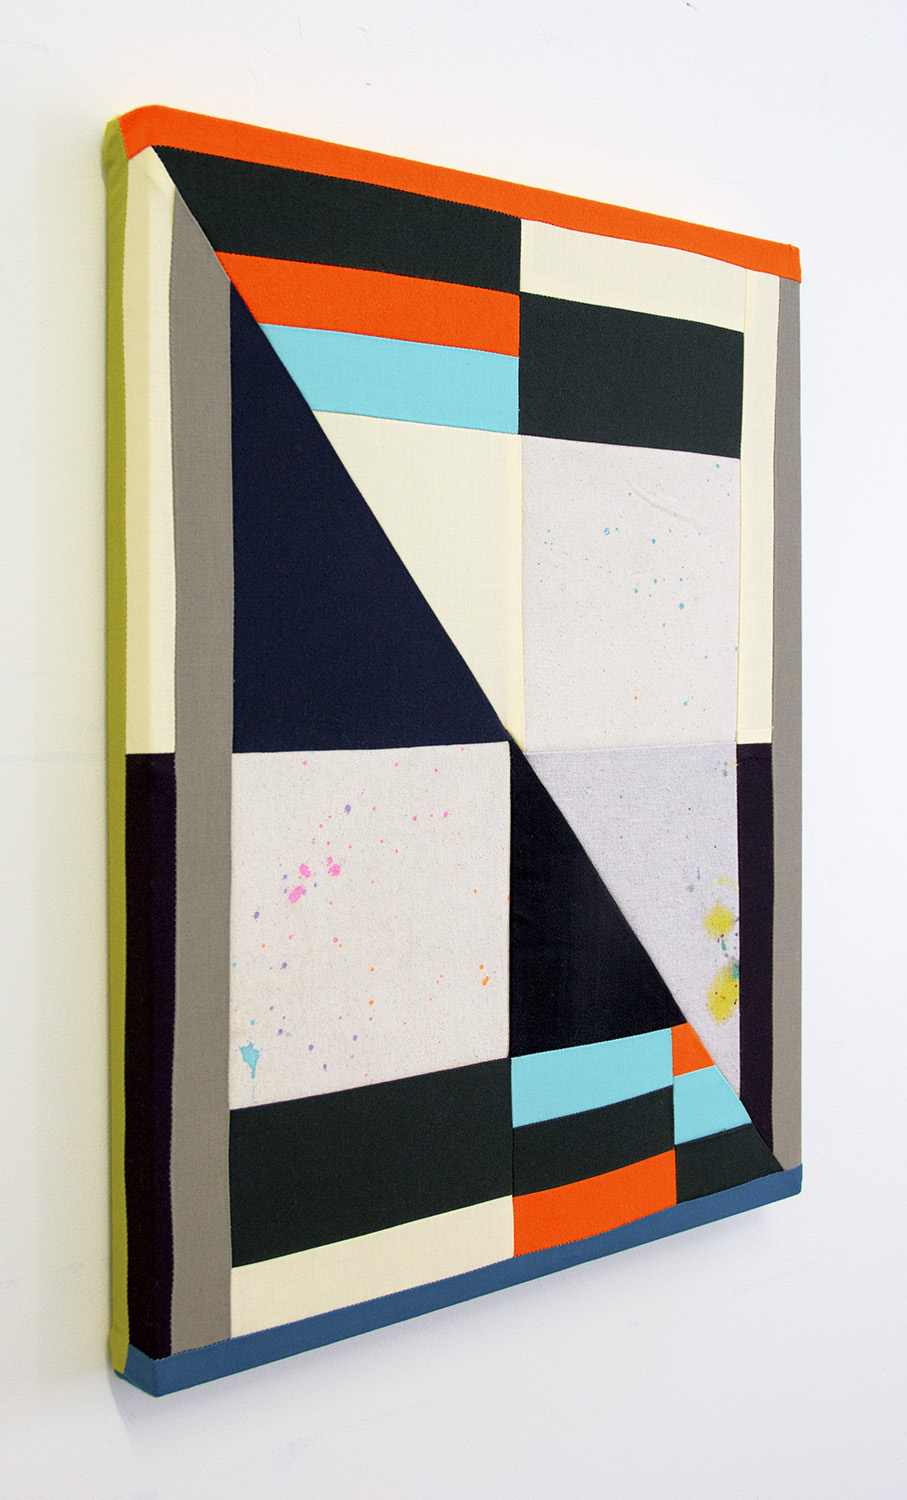    of Color, No. 8 (side view)   ,  2019 Sewn canvas, cotton, Levi’s denim, acrylic 20 x 16 inches (50.8 x 40.6 cm) 